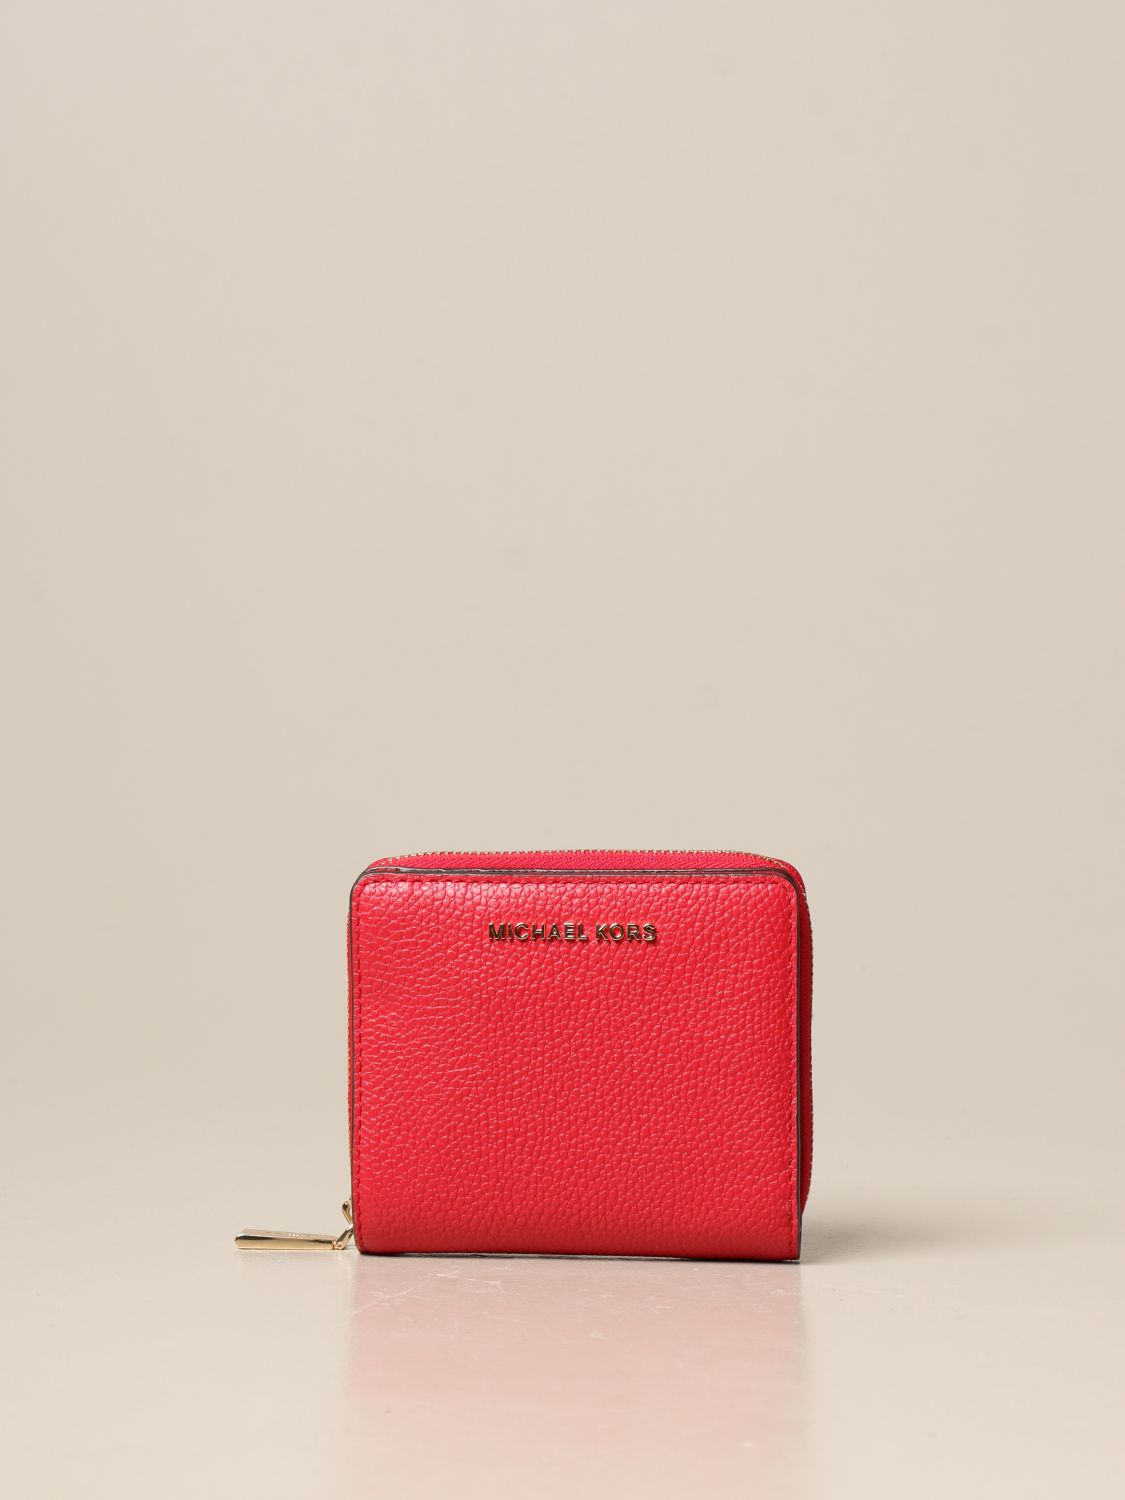 MICHAEL KORS: Michael wallet in textured leather - Red | Michael Kors wallet  34F9GJ6Z8L online on 